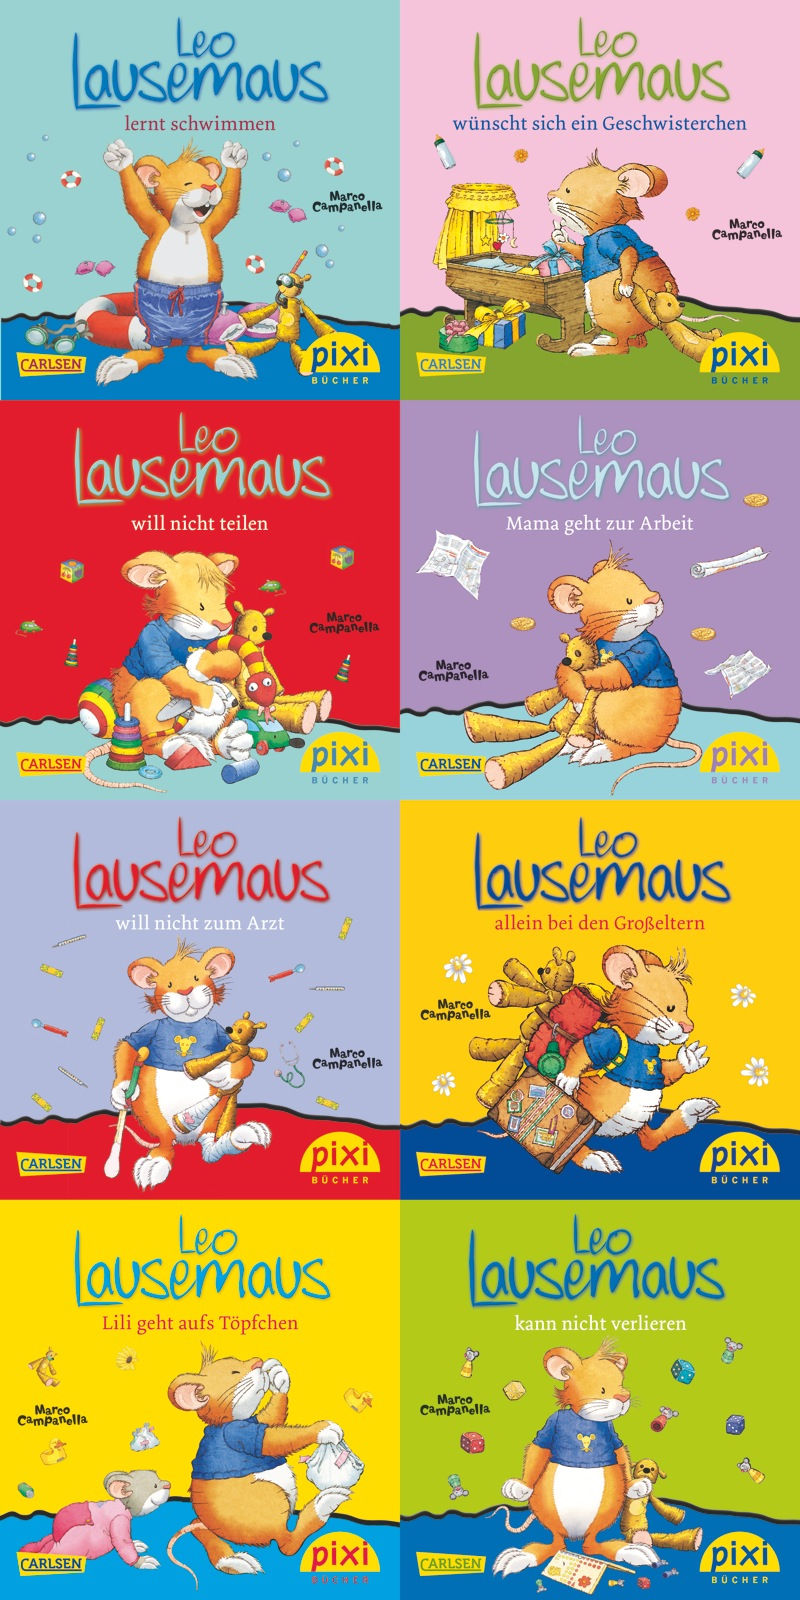 8 Pixi Bücher Leo Lausemaus  + BONUS